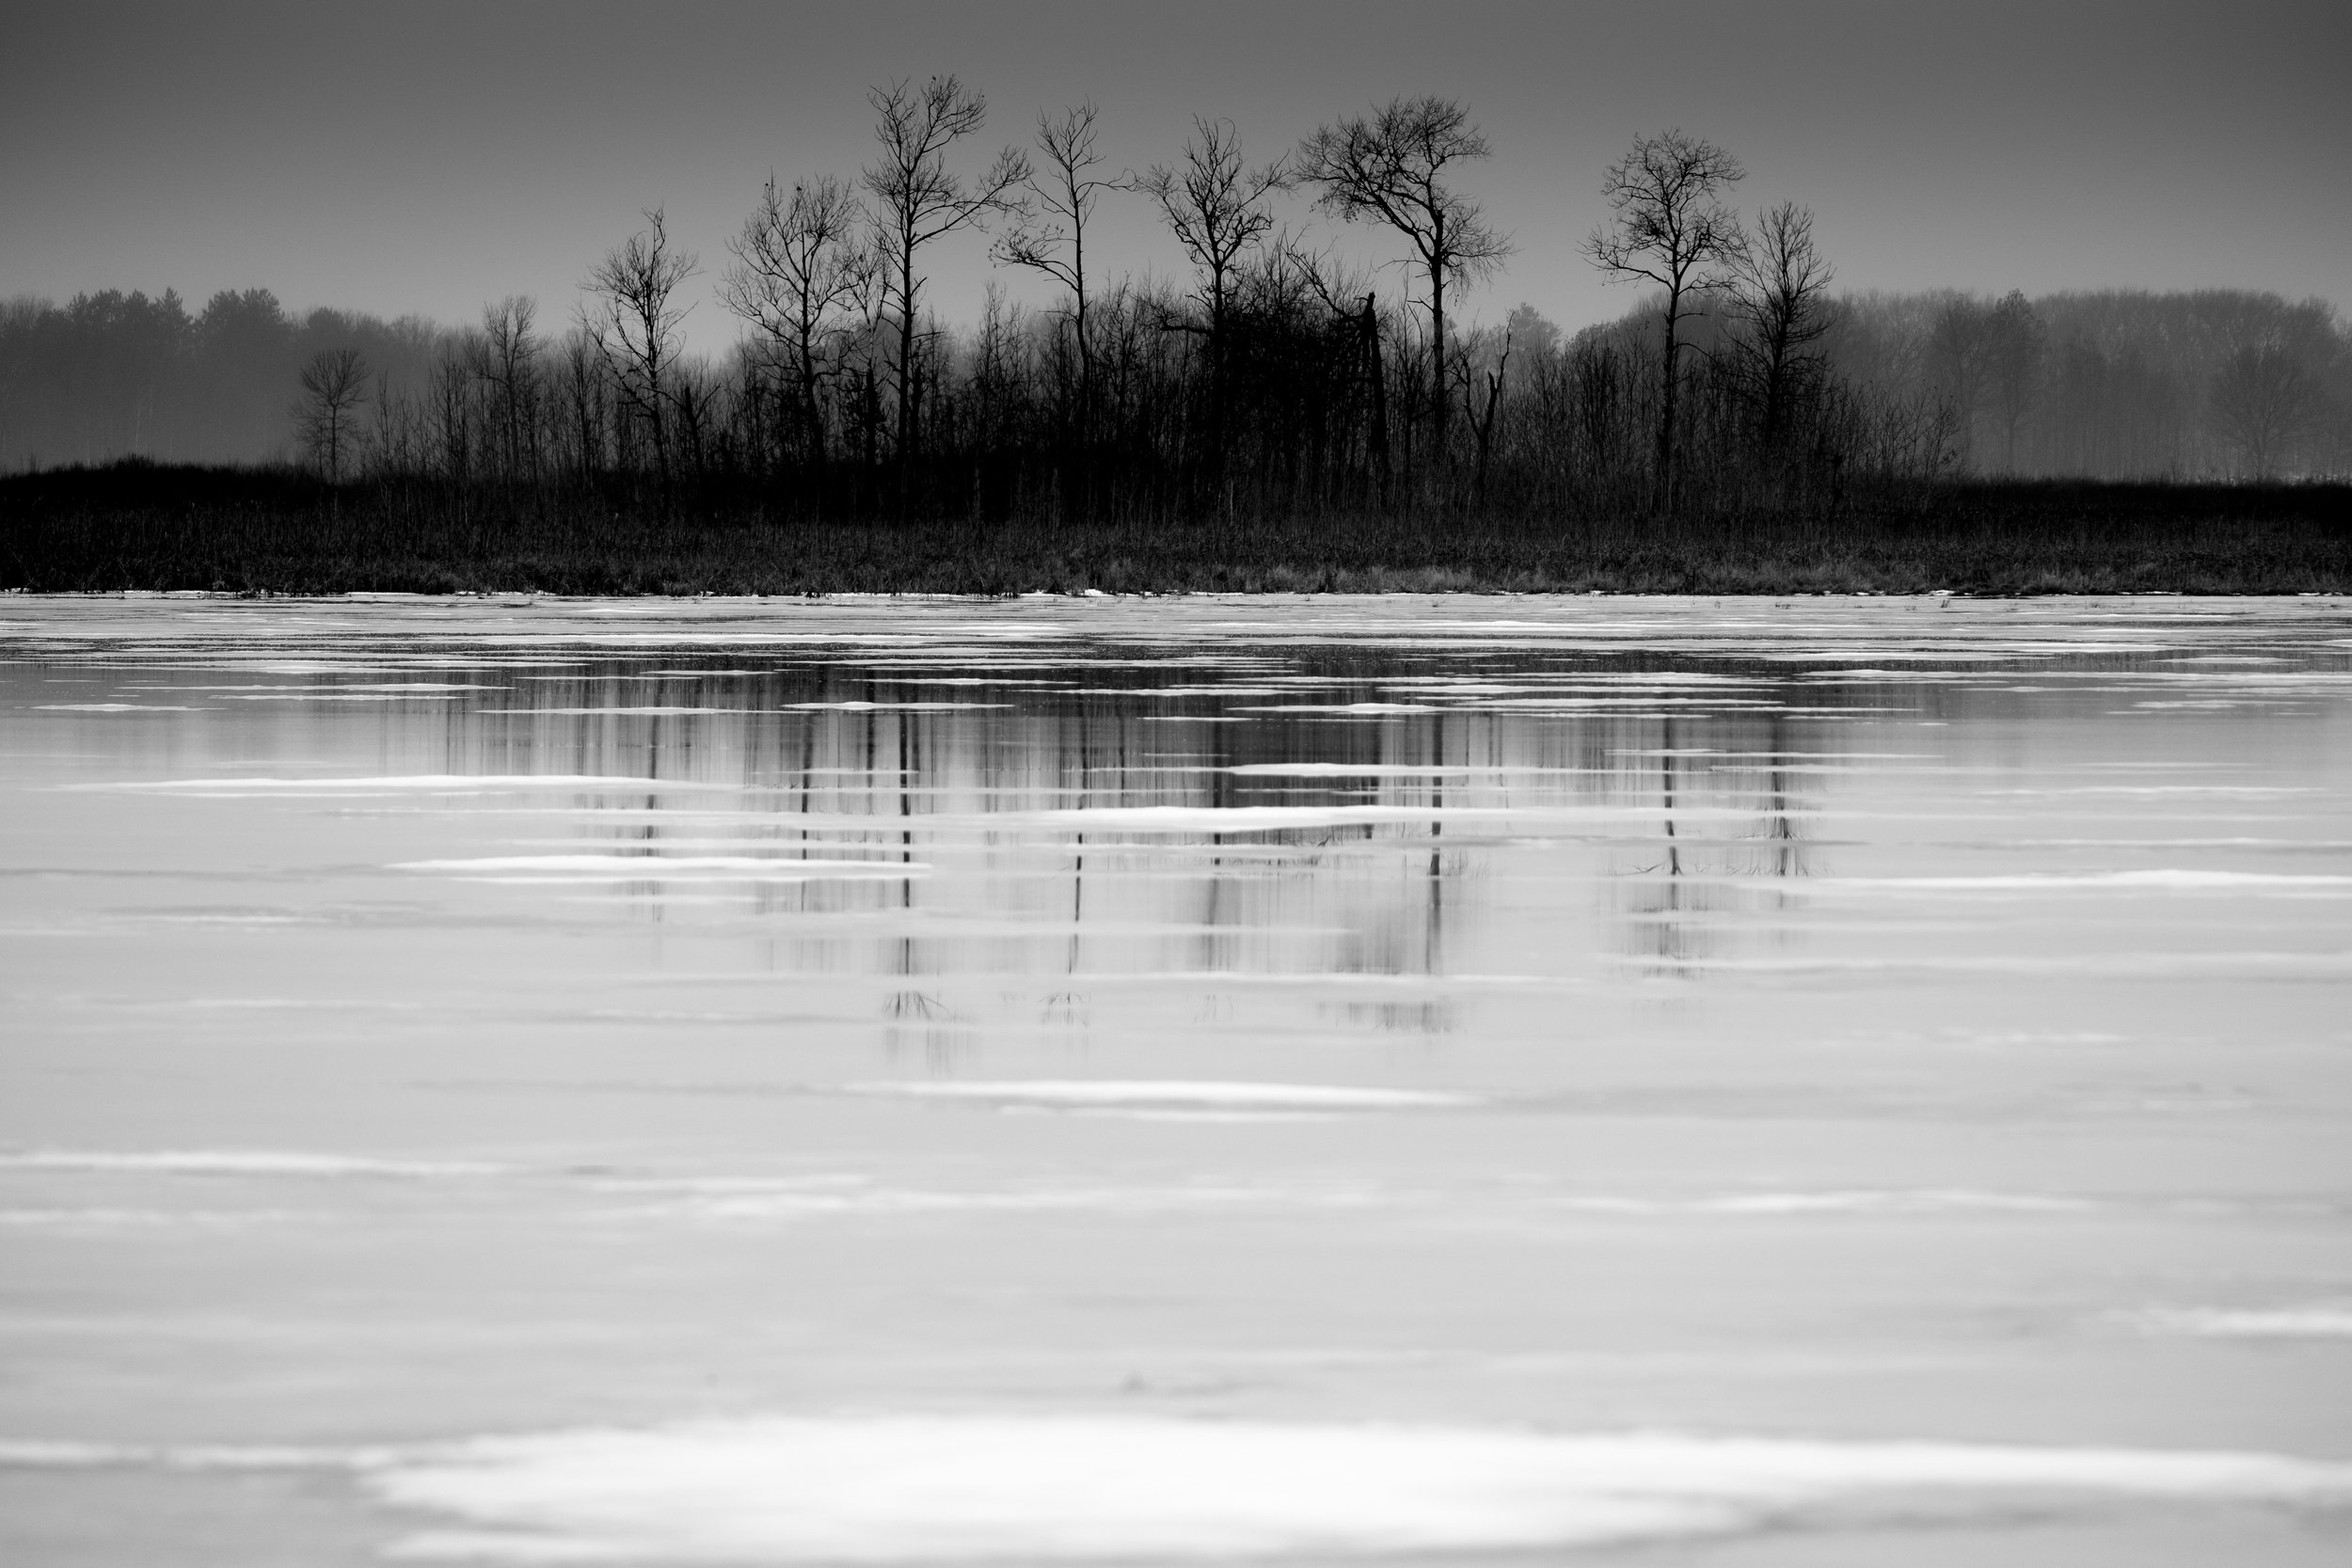 Water and Ice Series-BW Carlos Avery.jpg